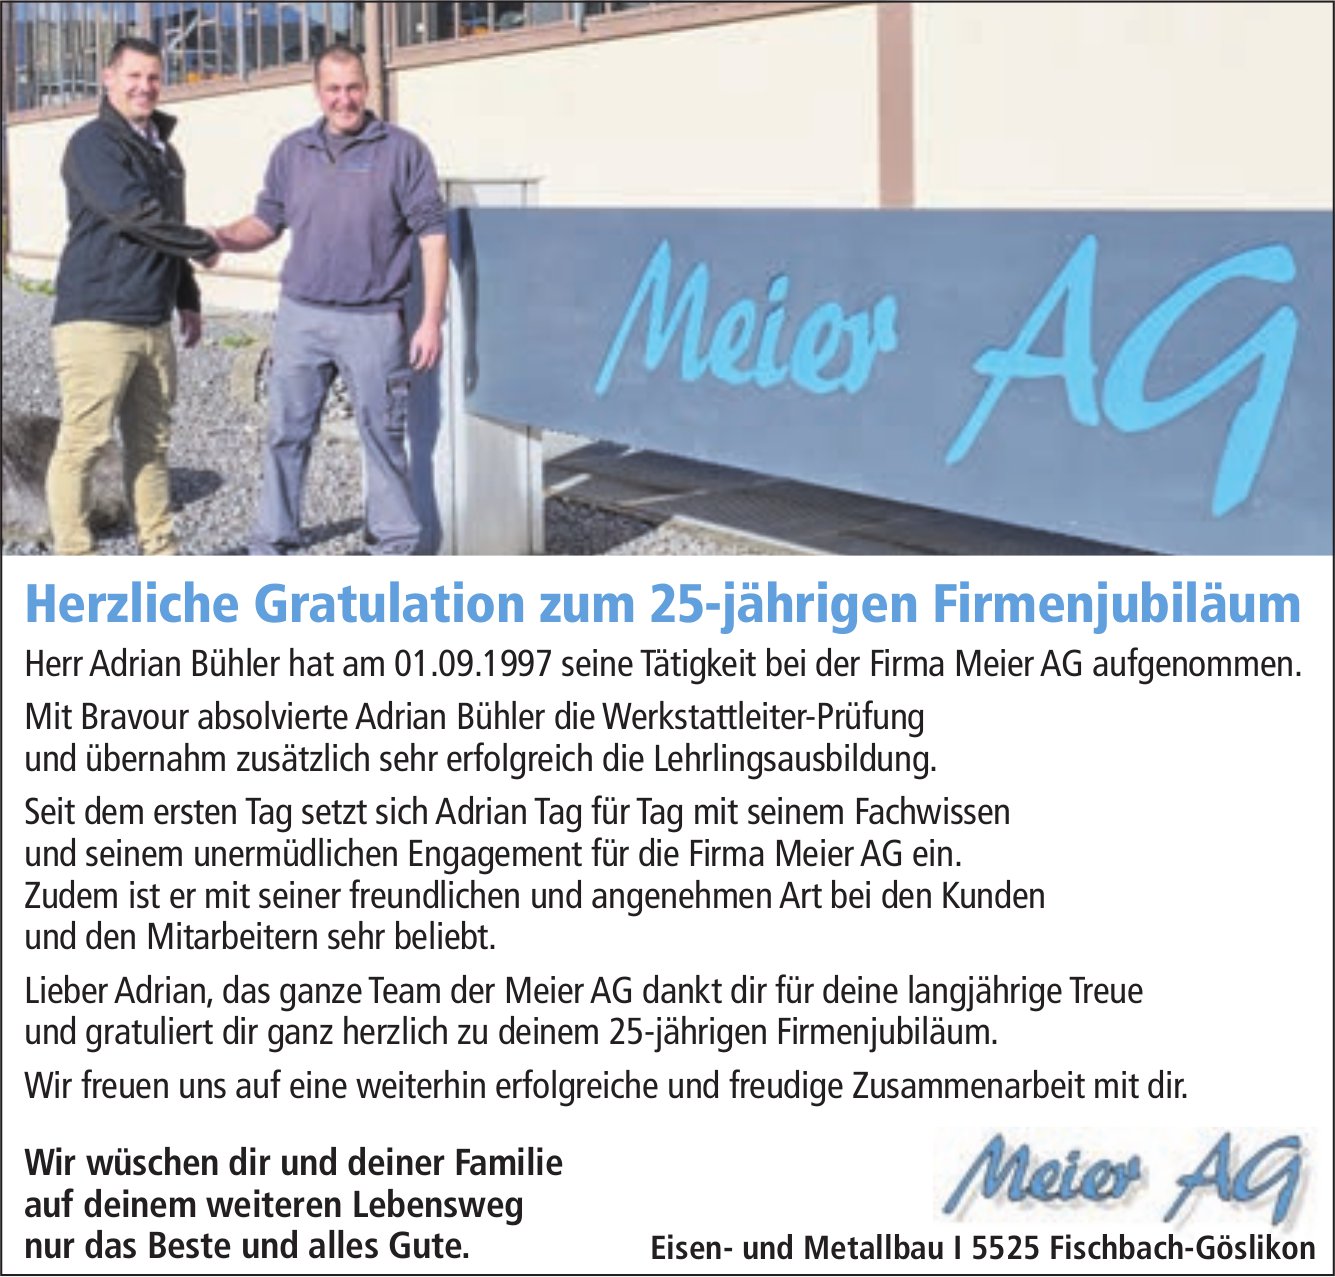 Meier AG, Fischbach-Göslikon - Adrian Bühler, Herzliche Gratulation zum 25-jährigen Firmenjubiläum